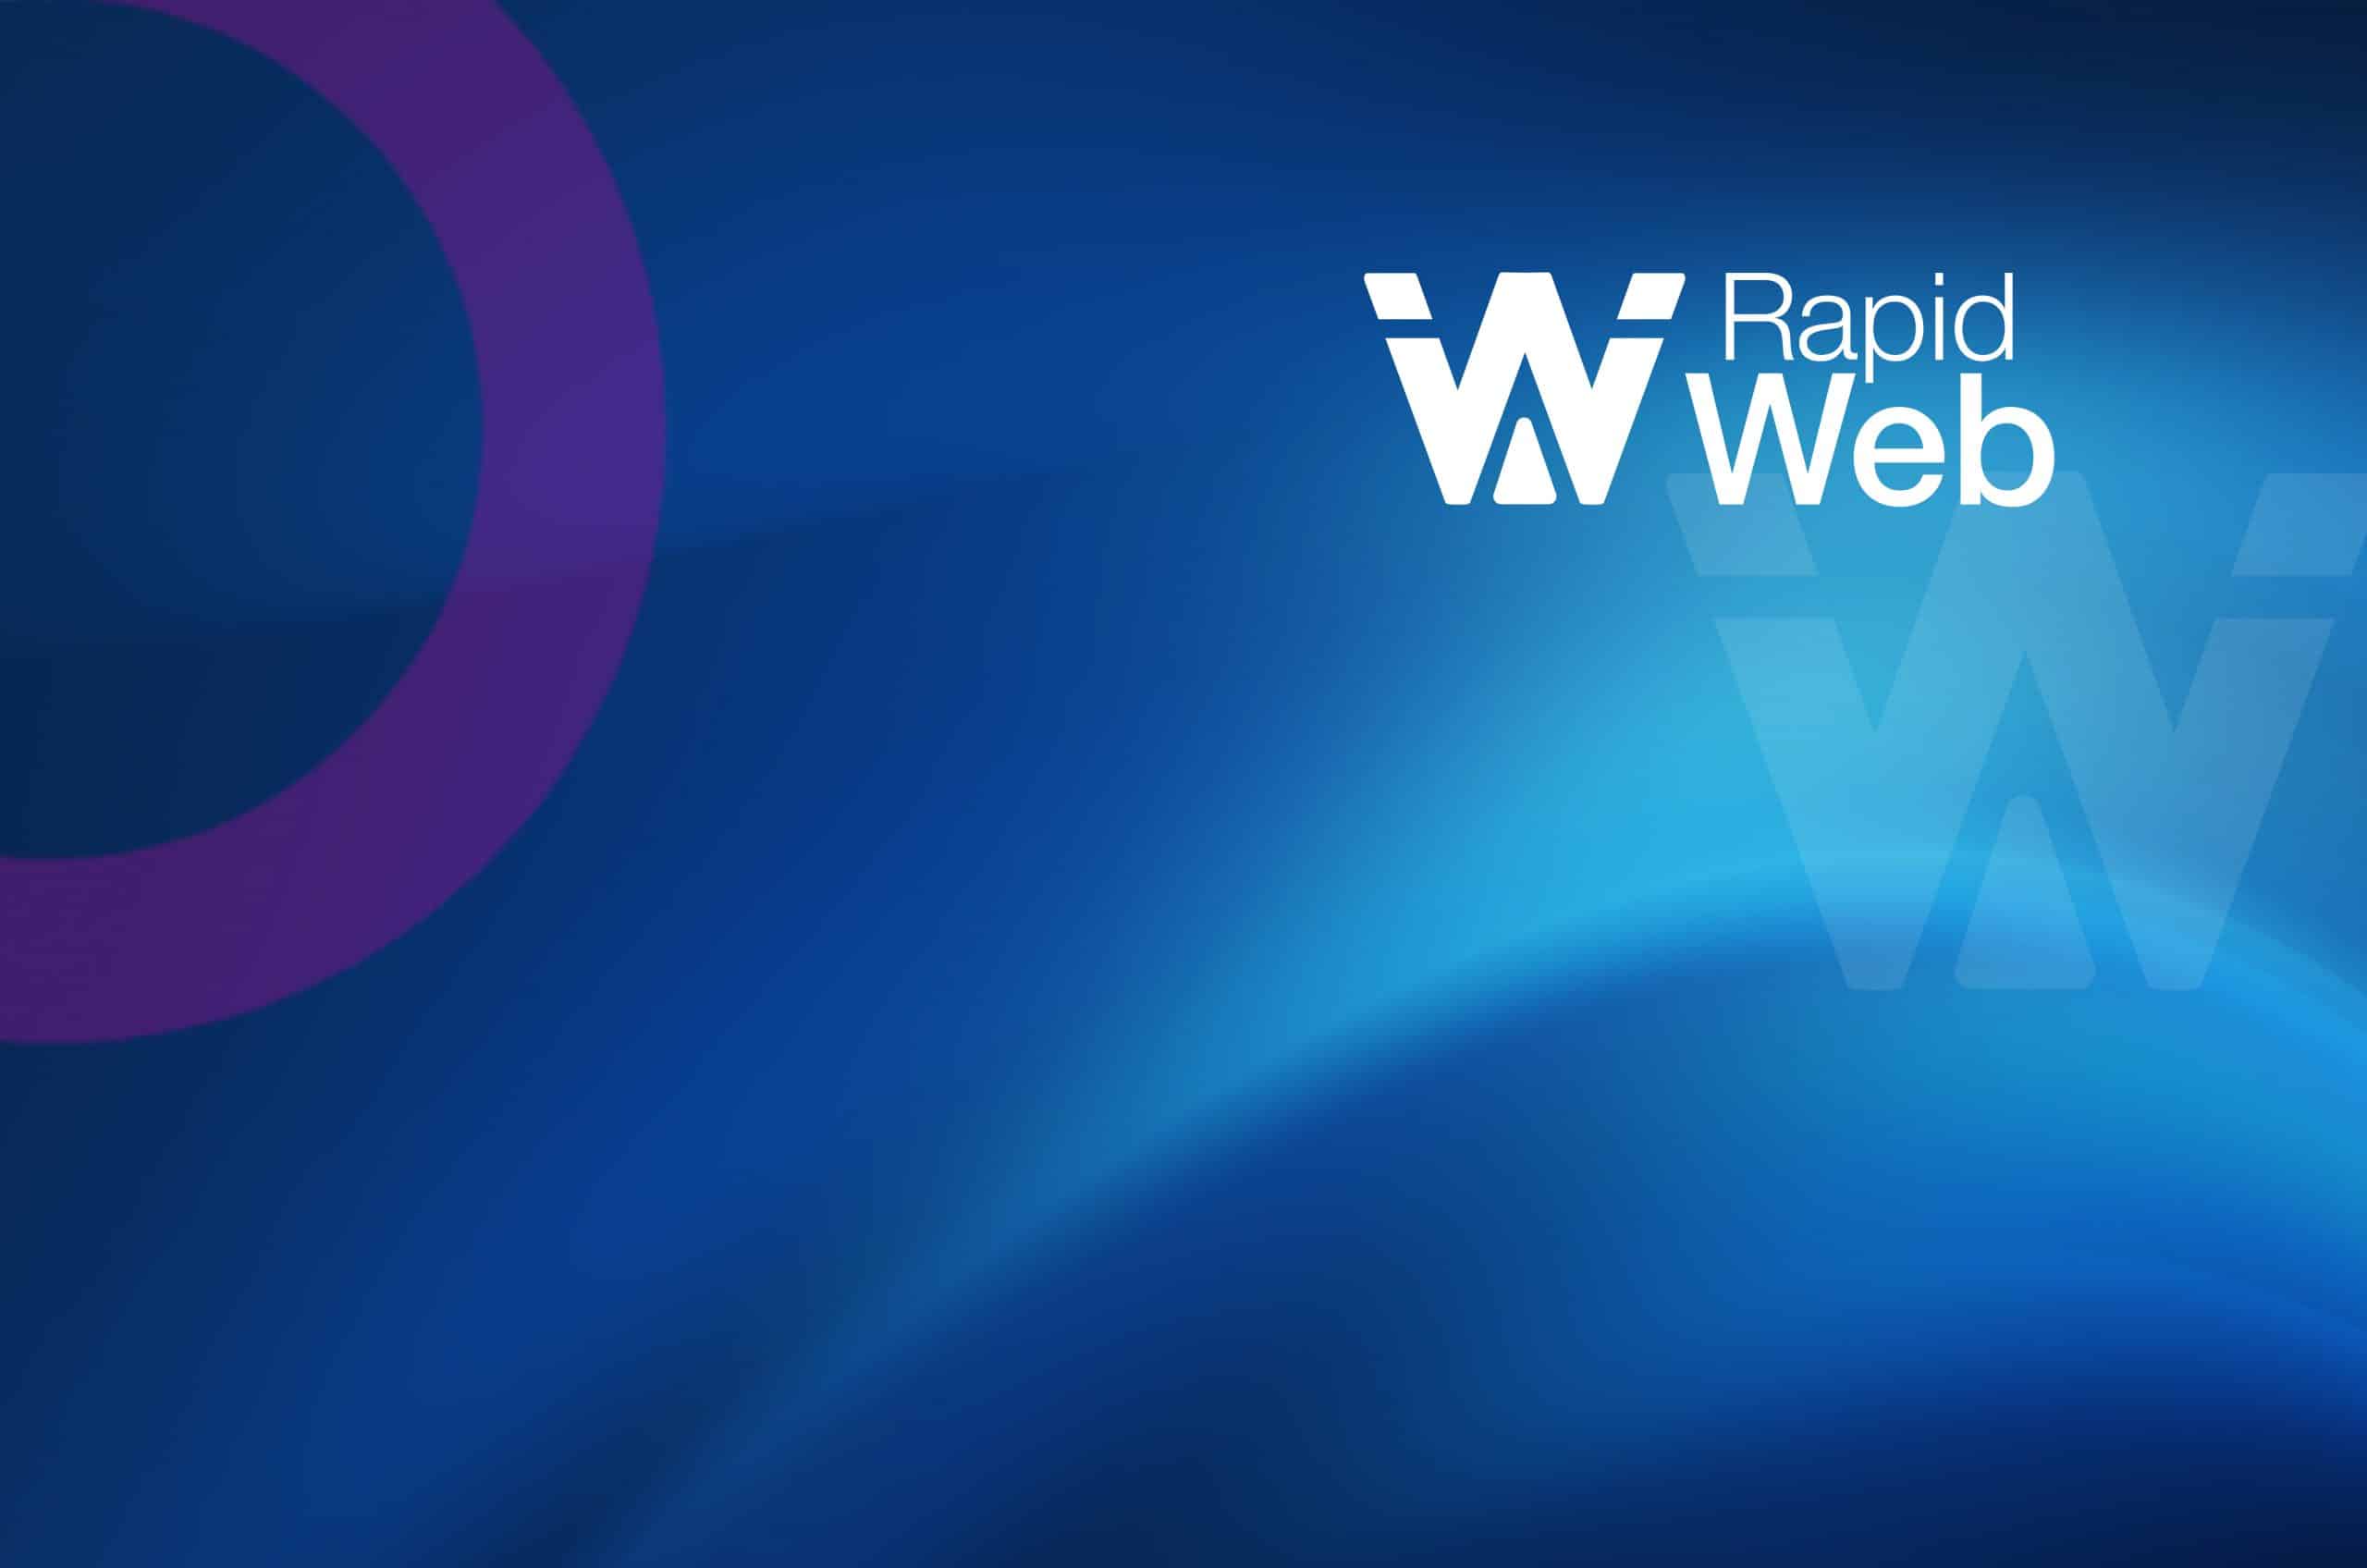 rapid web logo on blue background